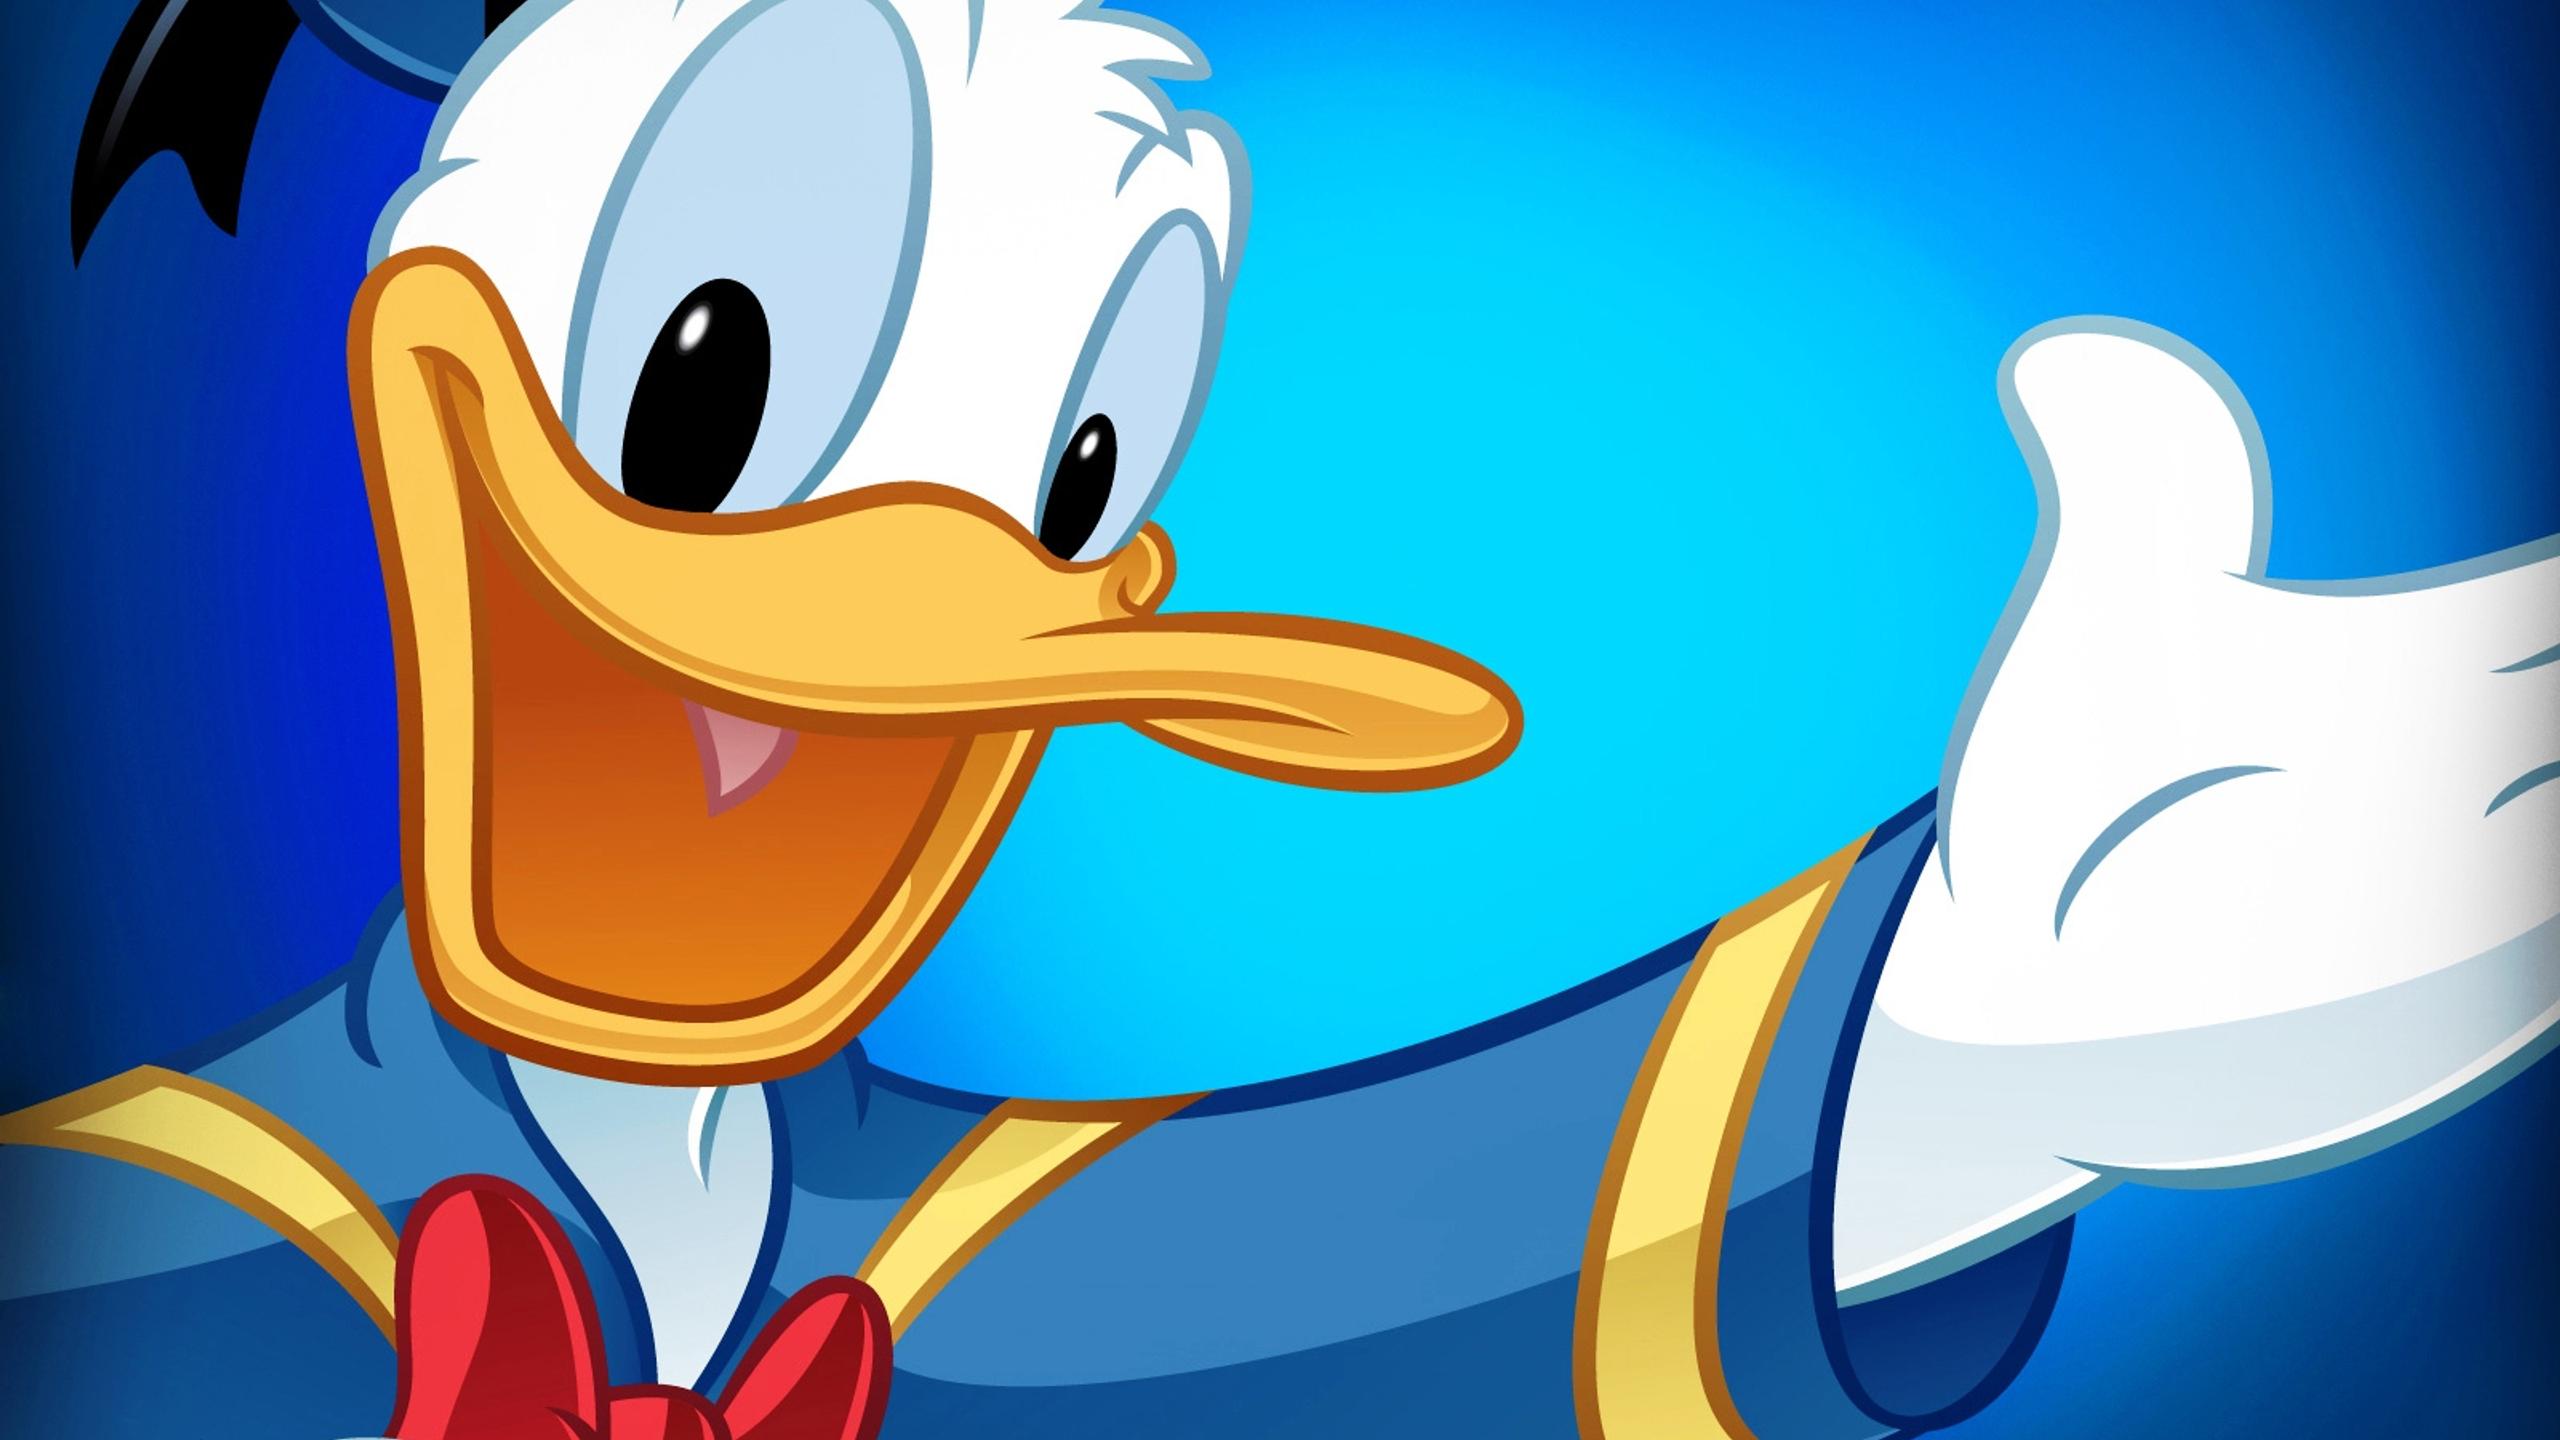 Donald Duck in blue - Cartoon wallpaper